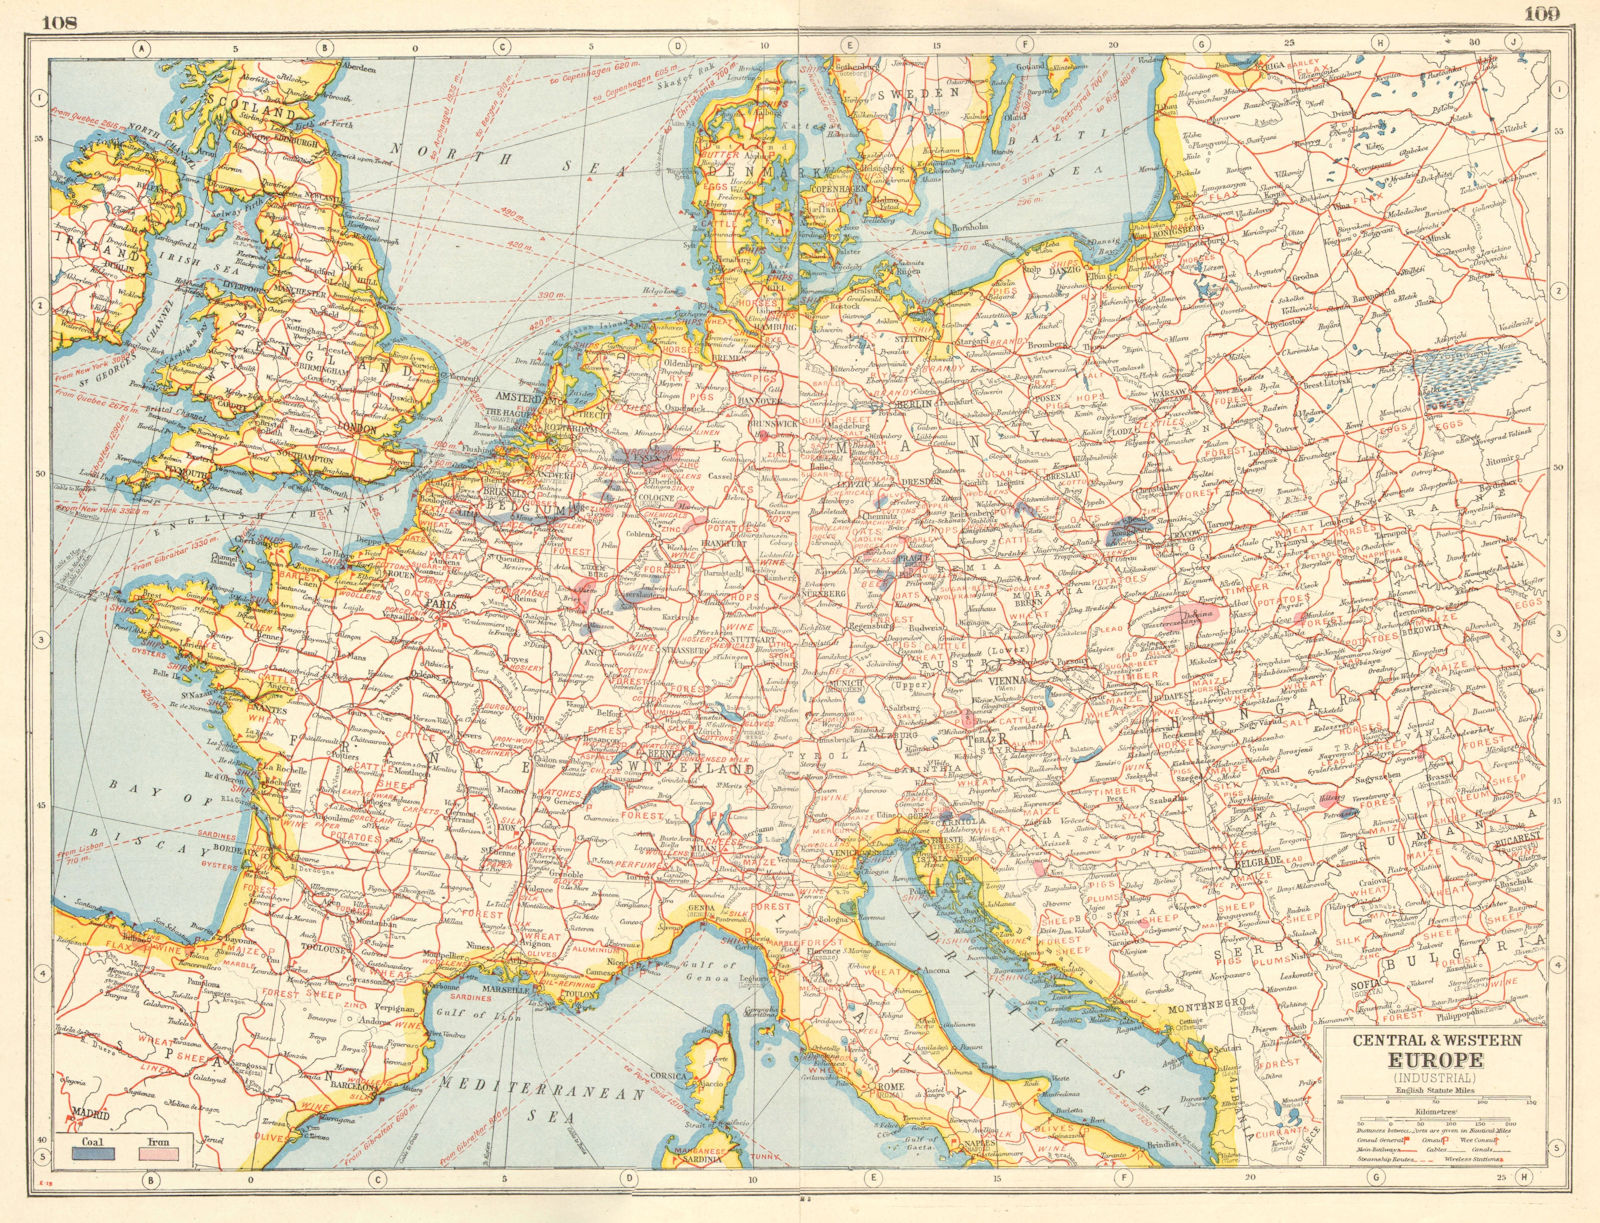 EUROPE. INDUSTRIES. Coal & Iron deposits. British consuls. Railways 1920 map